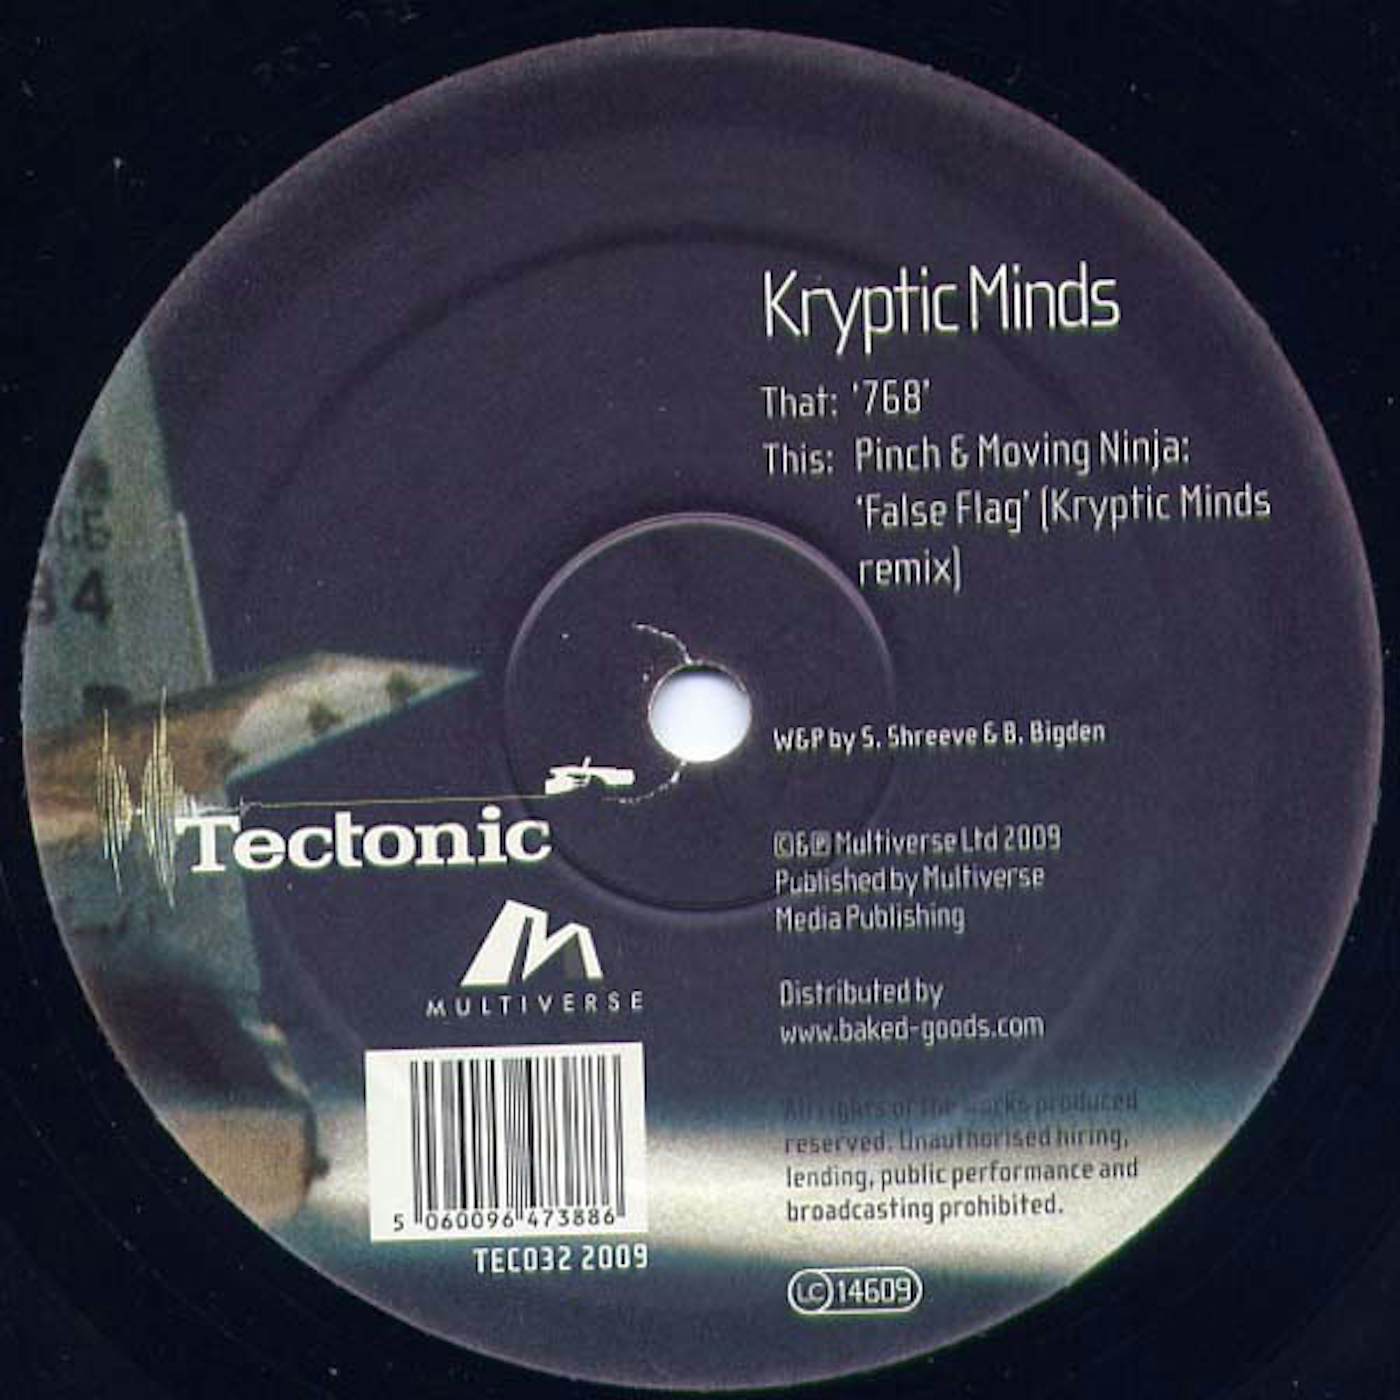 Kryptic Minds 768 Vinyl Record